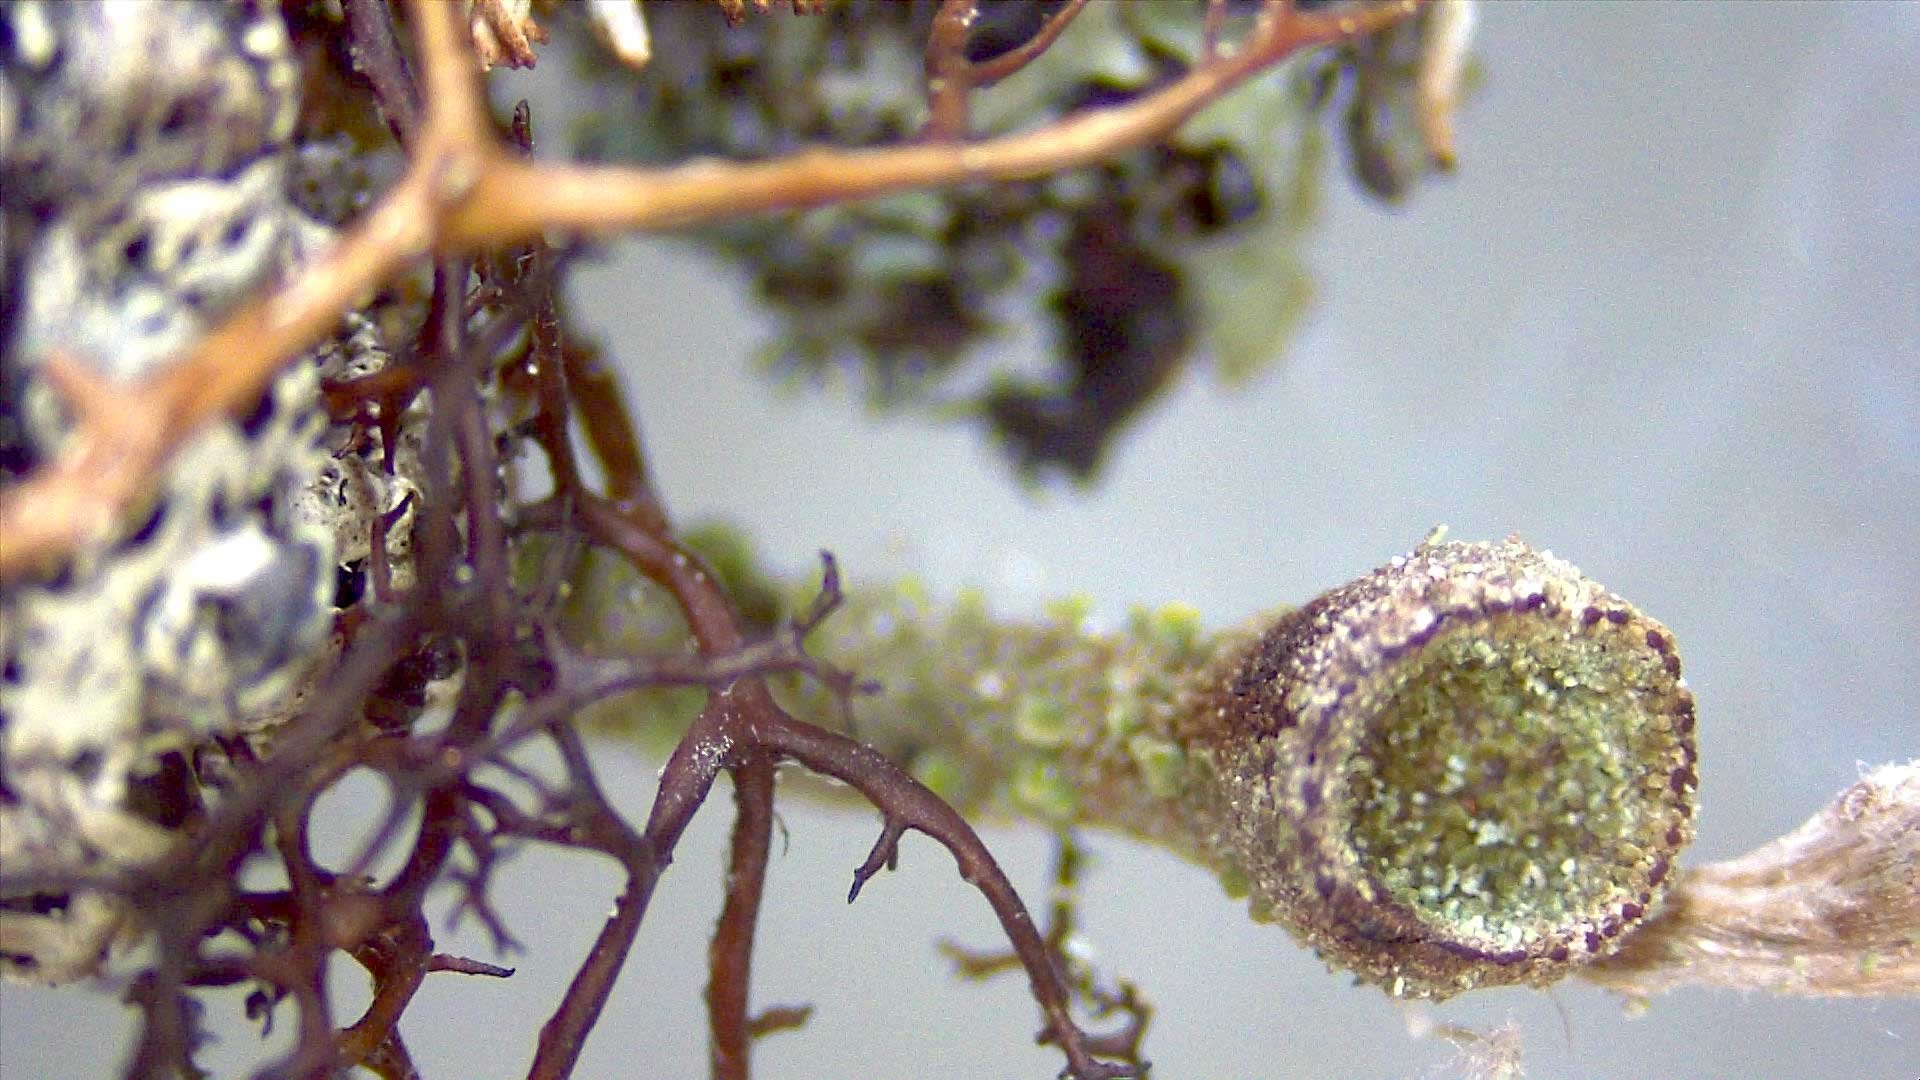 Malla-cup-lichen-entanglement002_for-web.jpg